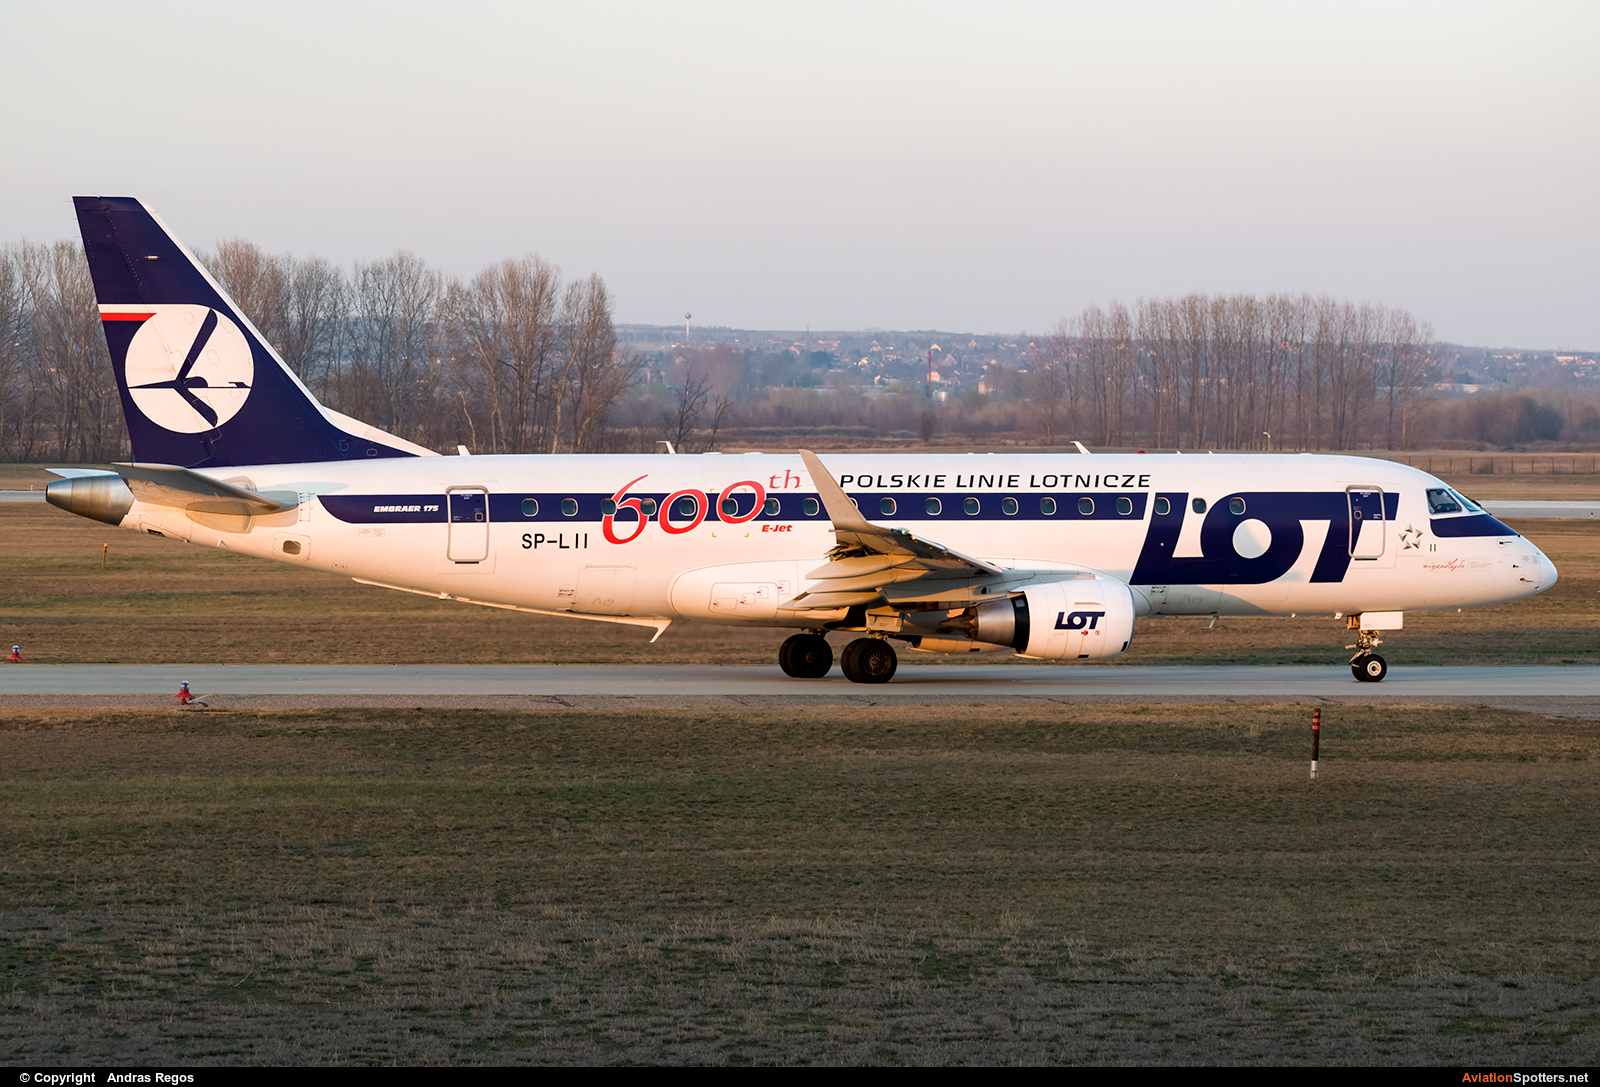 LOT - Polish Airlines  -  175LR  (SP-LII) By Andras Regos (regos)